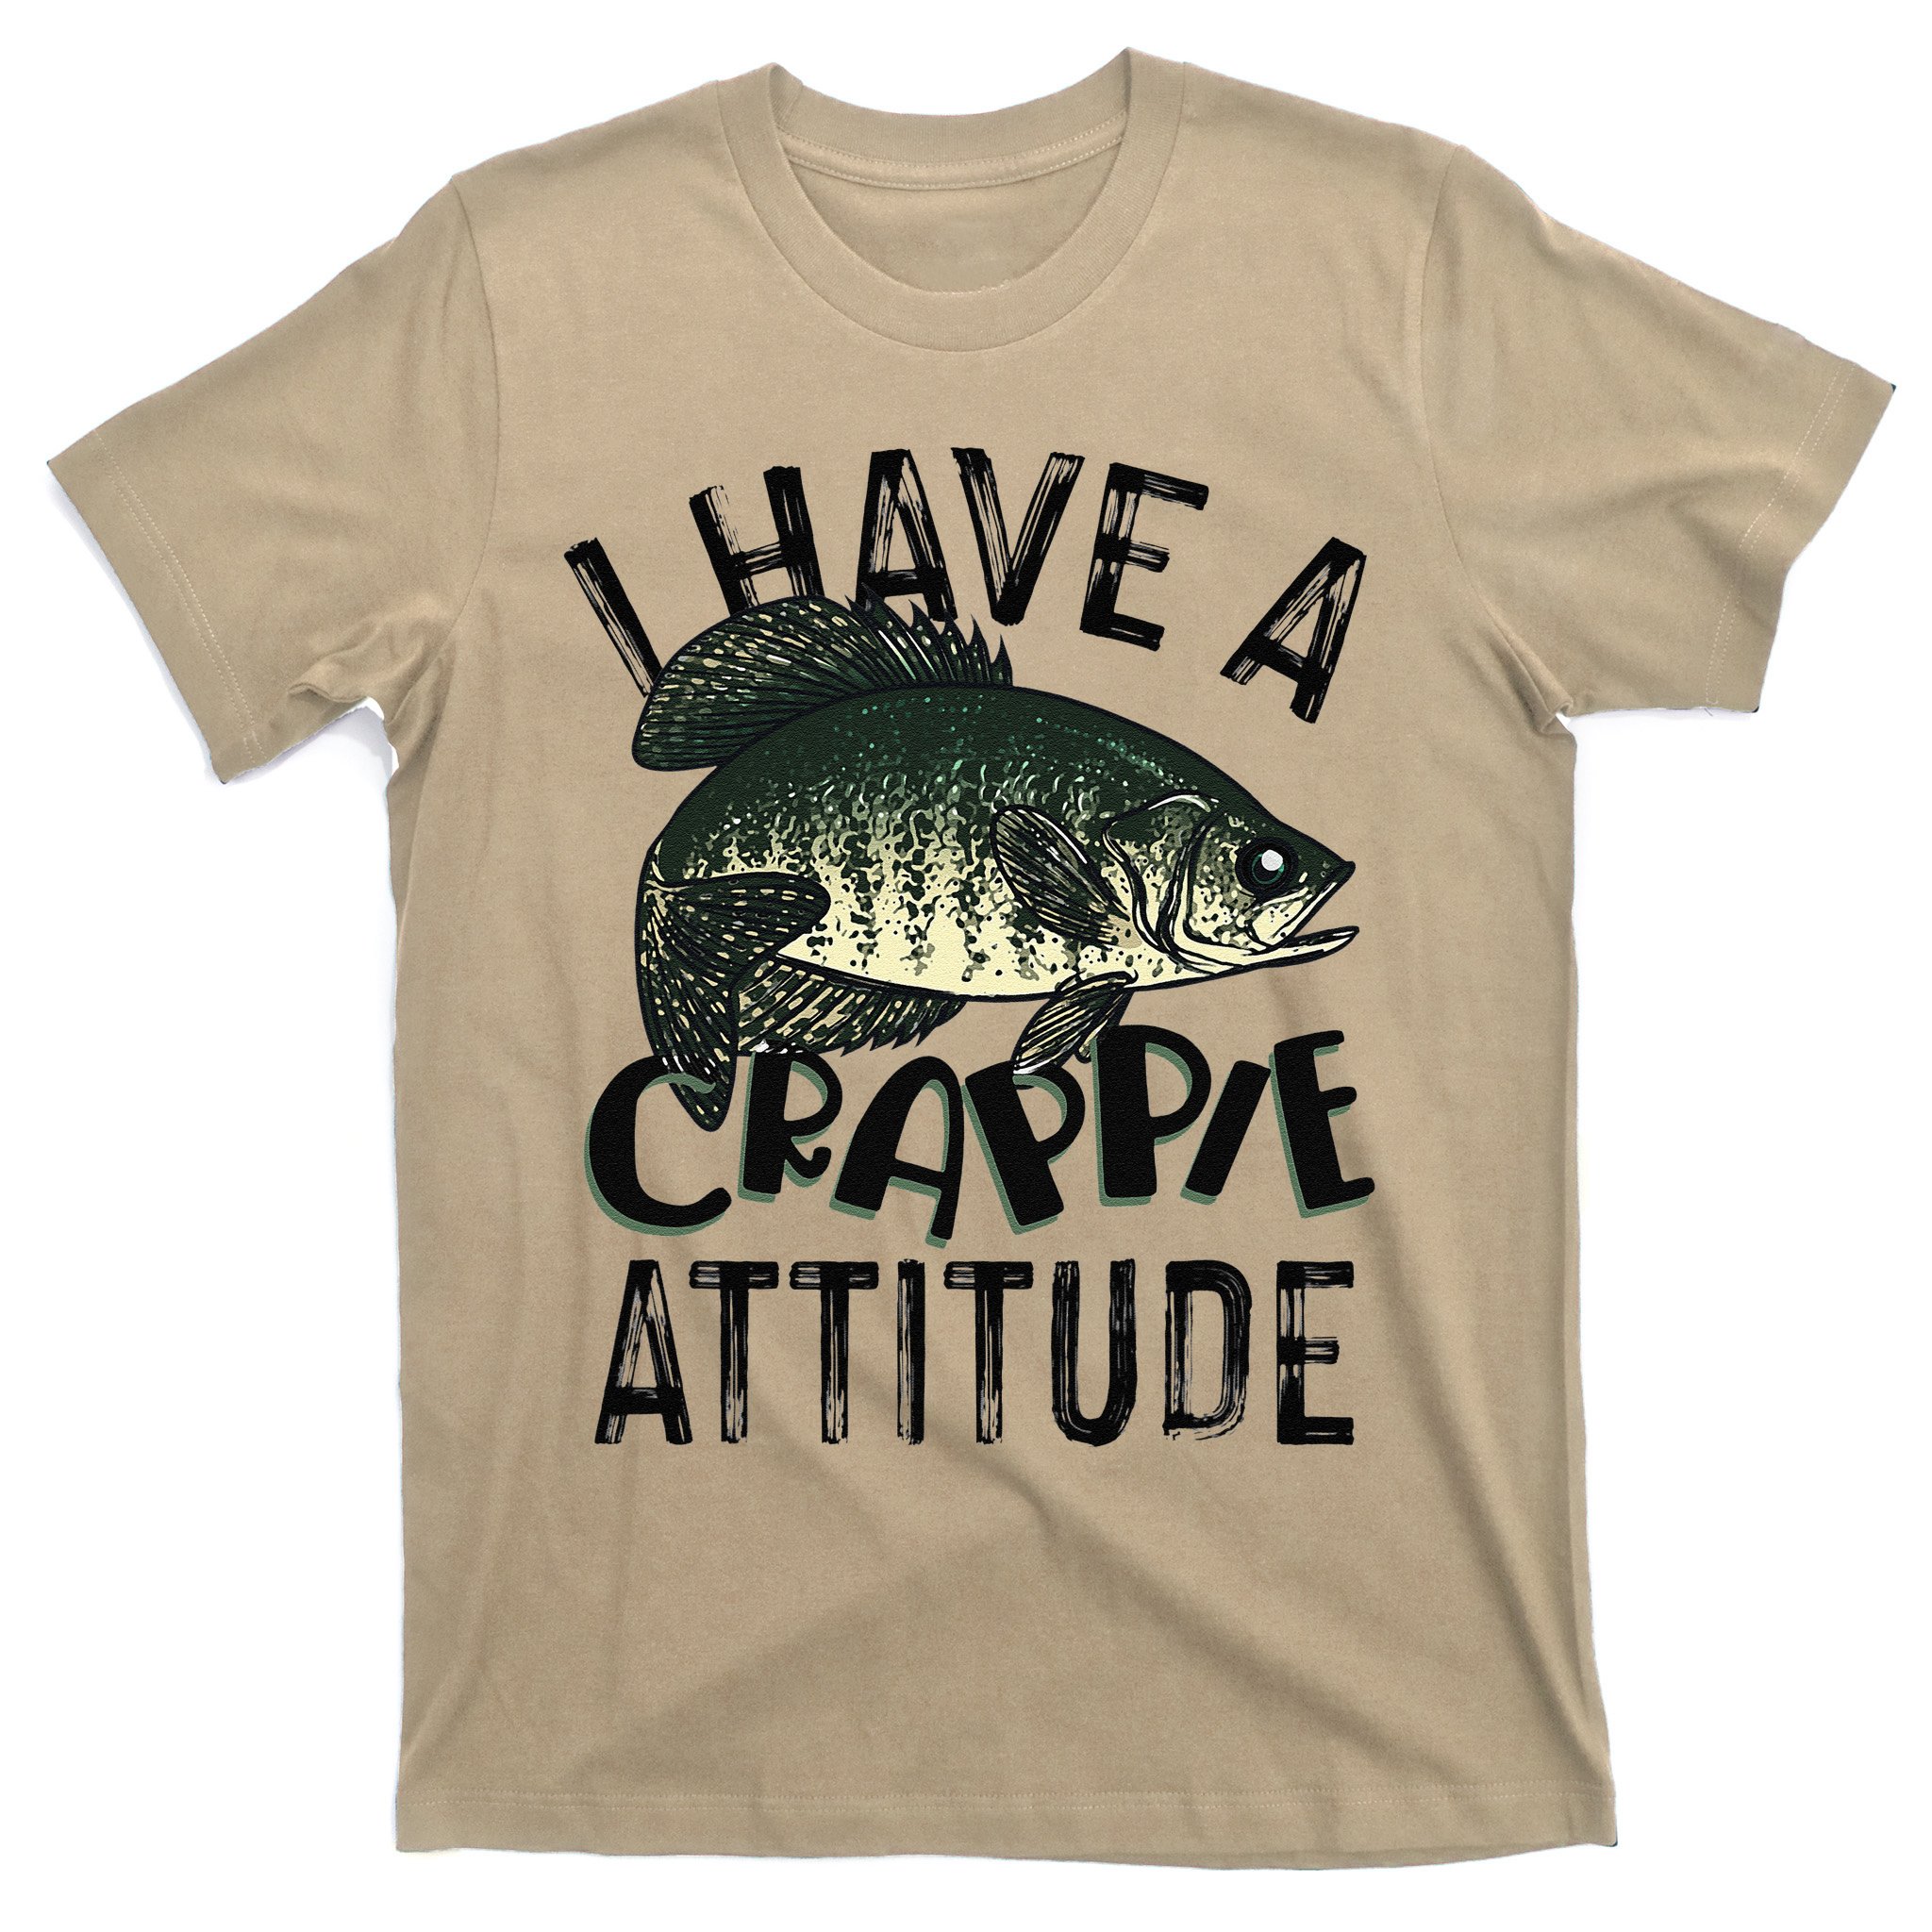  Crappie fishing shirt, Crappie attitude Long Sleeve T